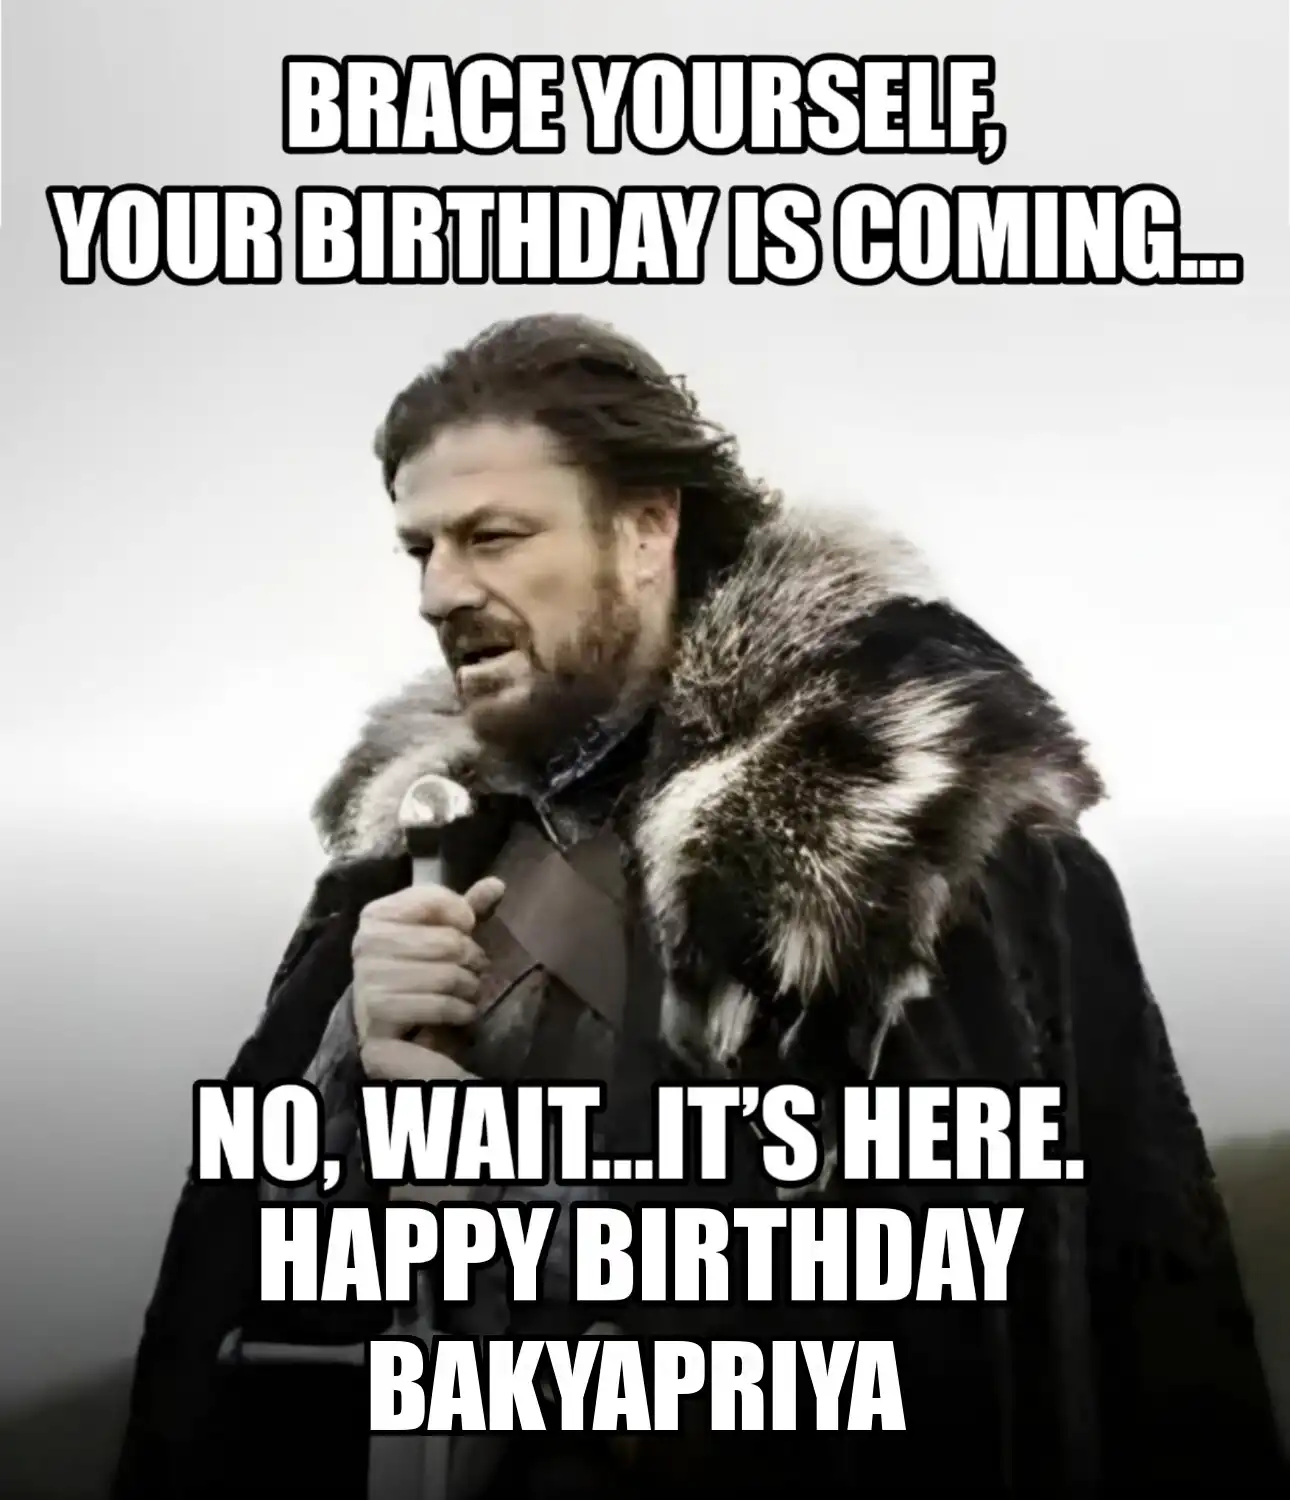 Happy Birthday Bakyapriya Brace Yourself Your Birthday Is Coming Meme